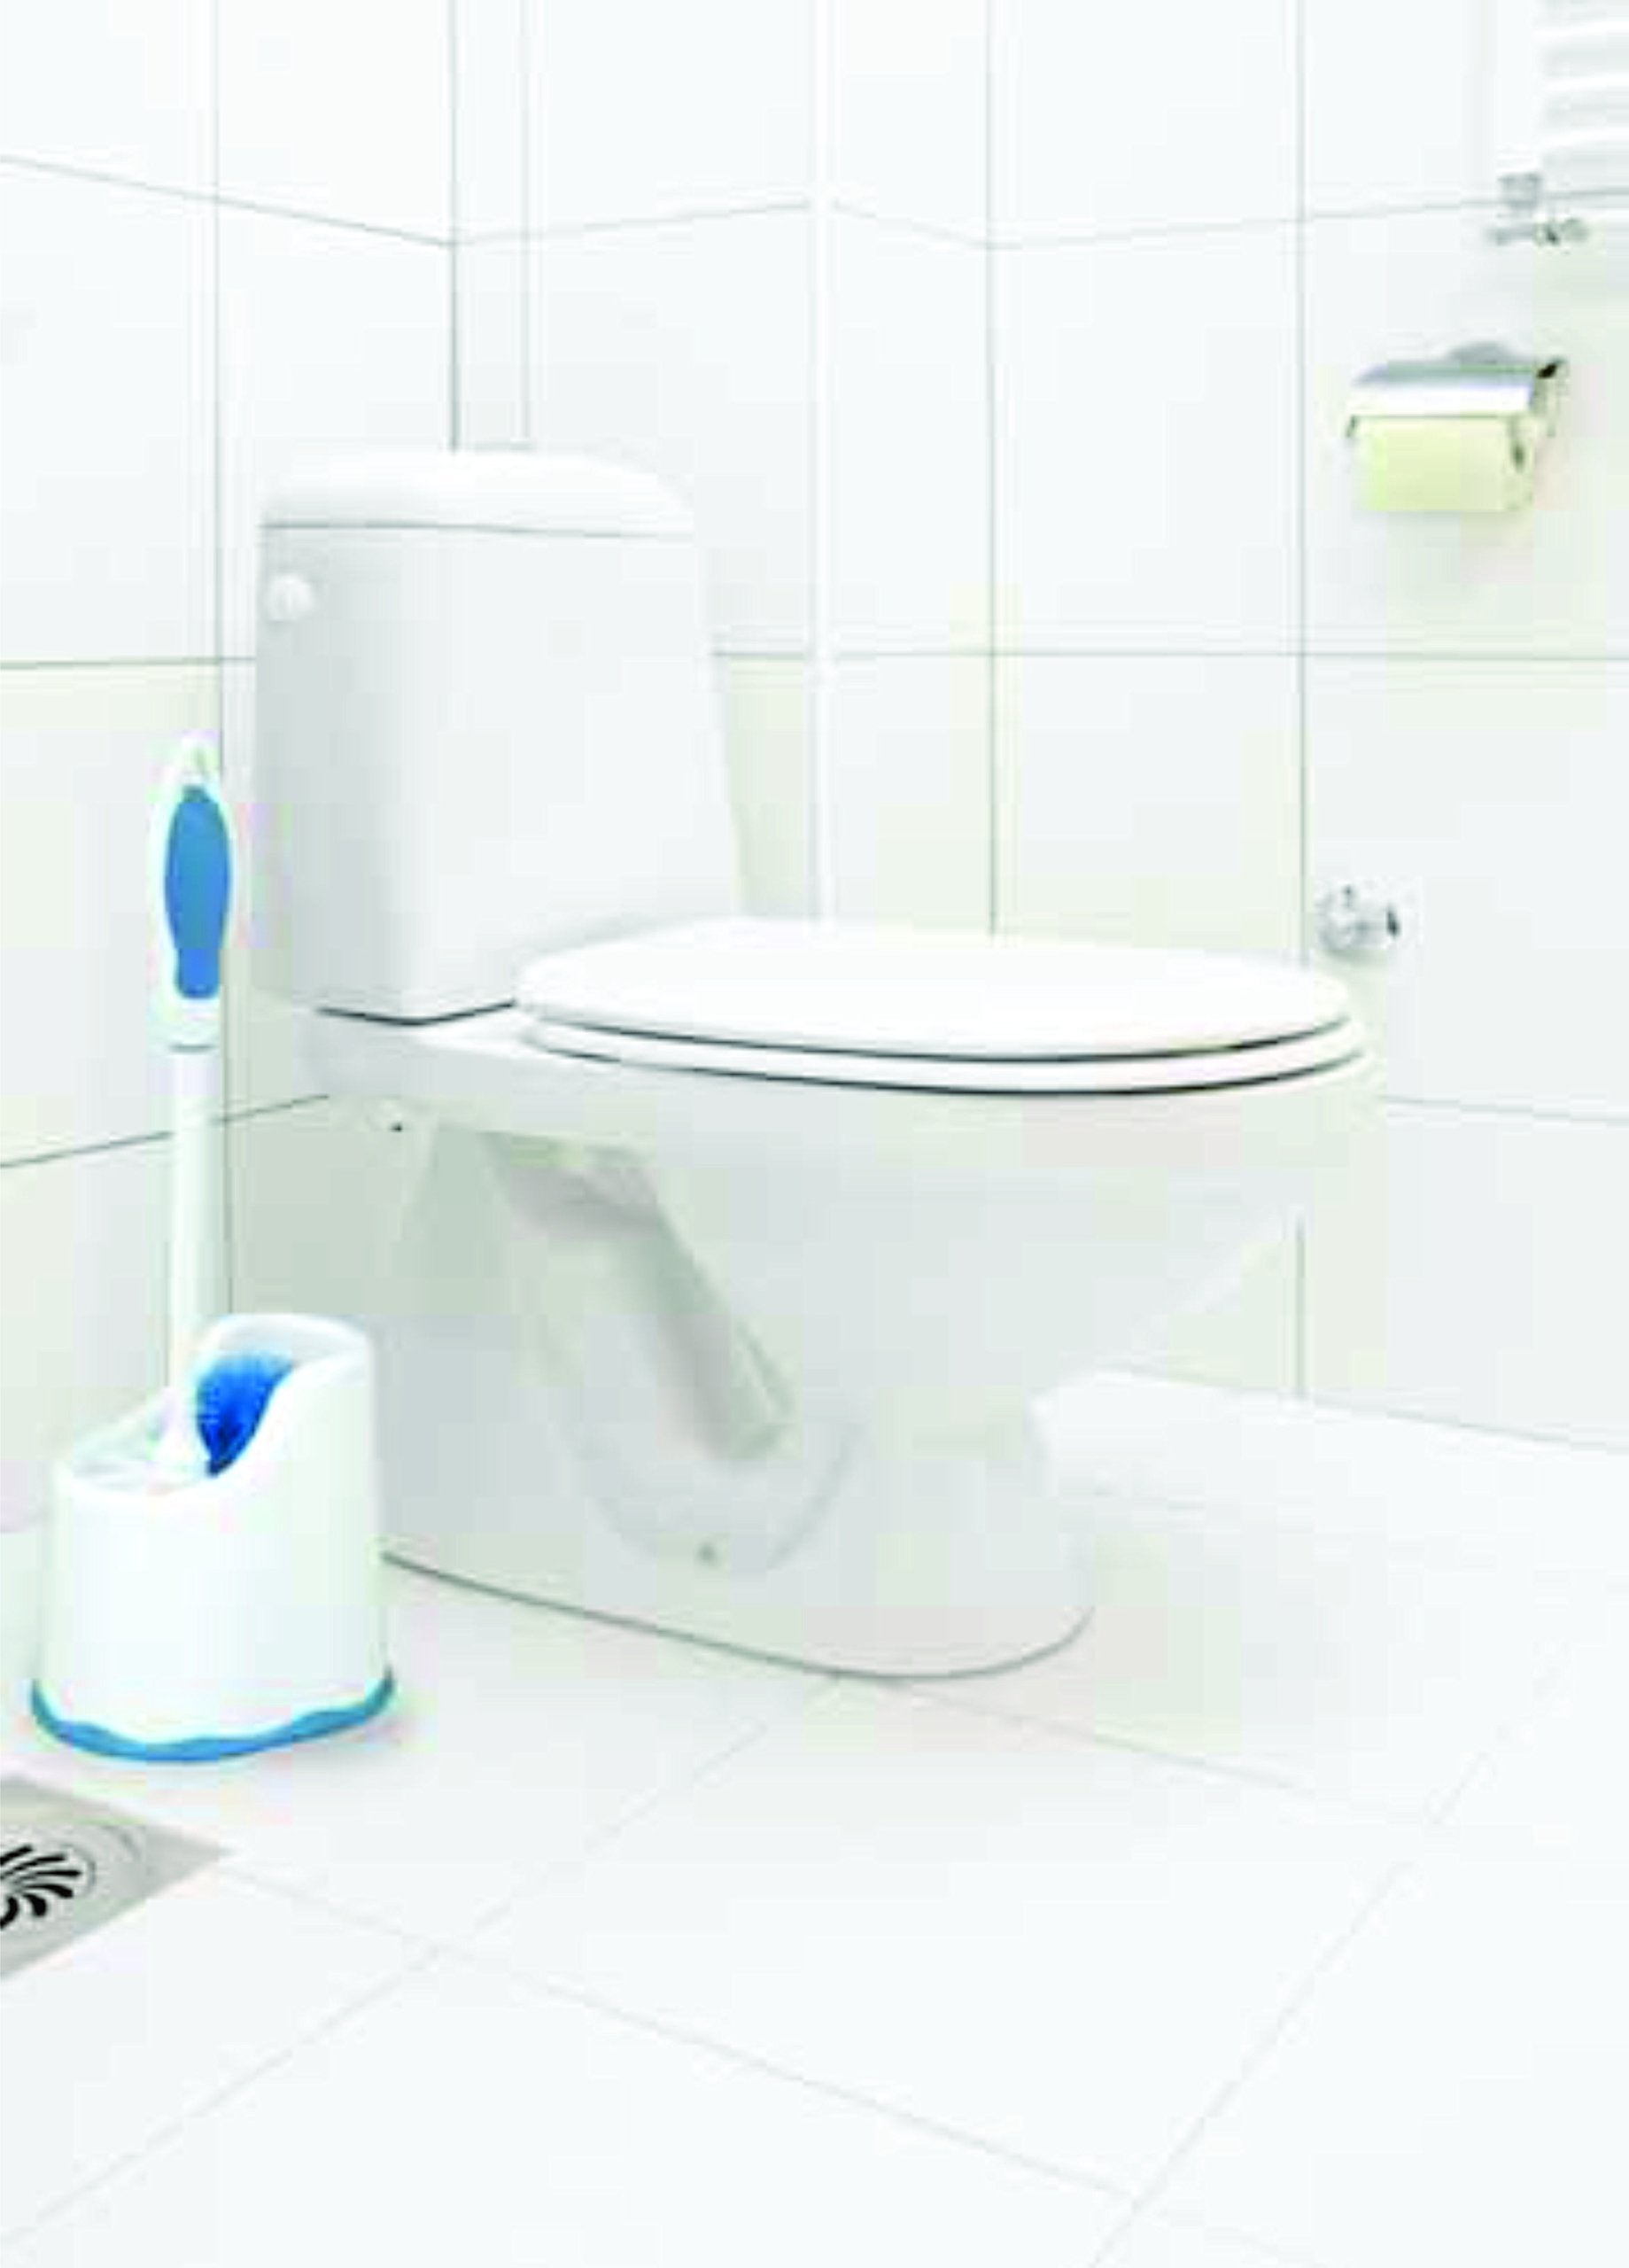 Superio Toilet Brush and Holder (2 Pack) Toilet Bowl Cleaner Brush